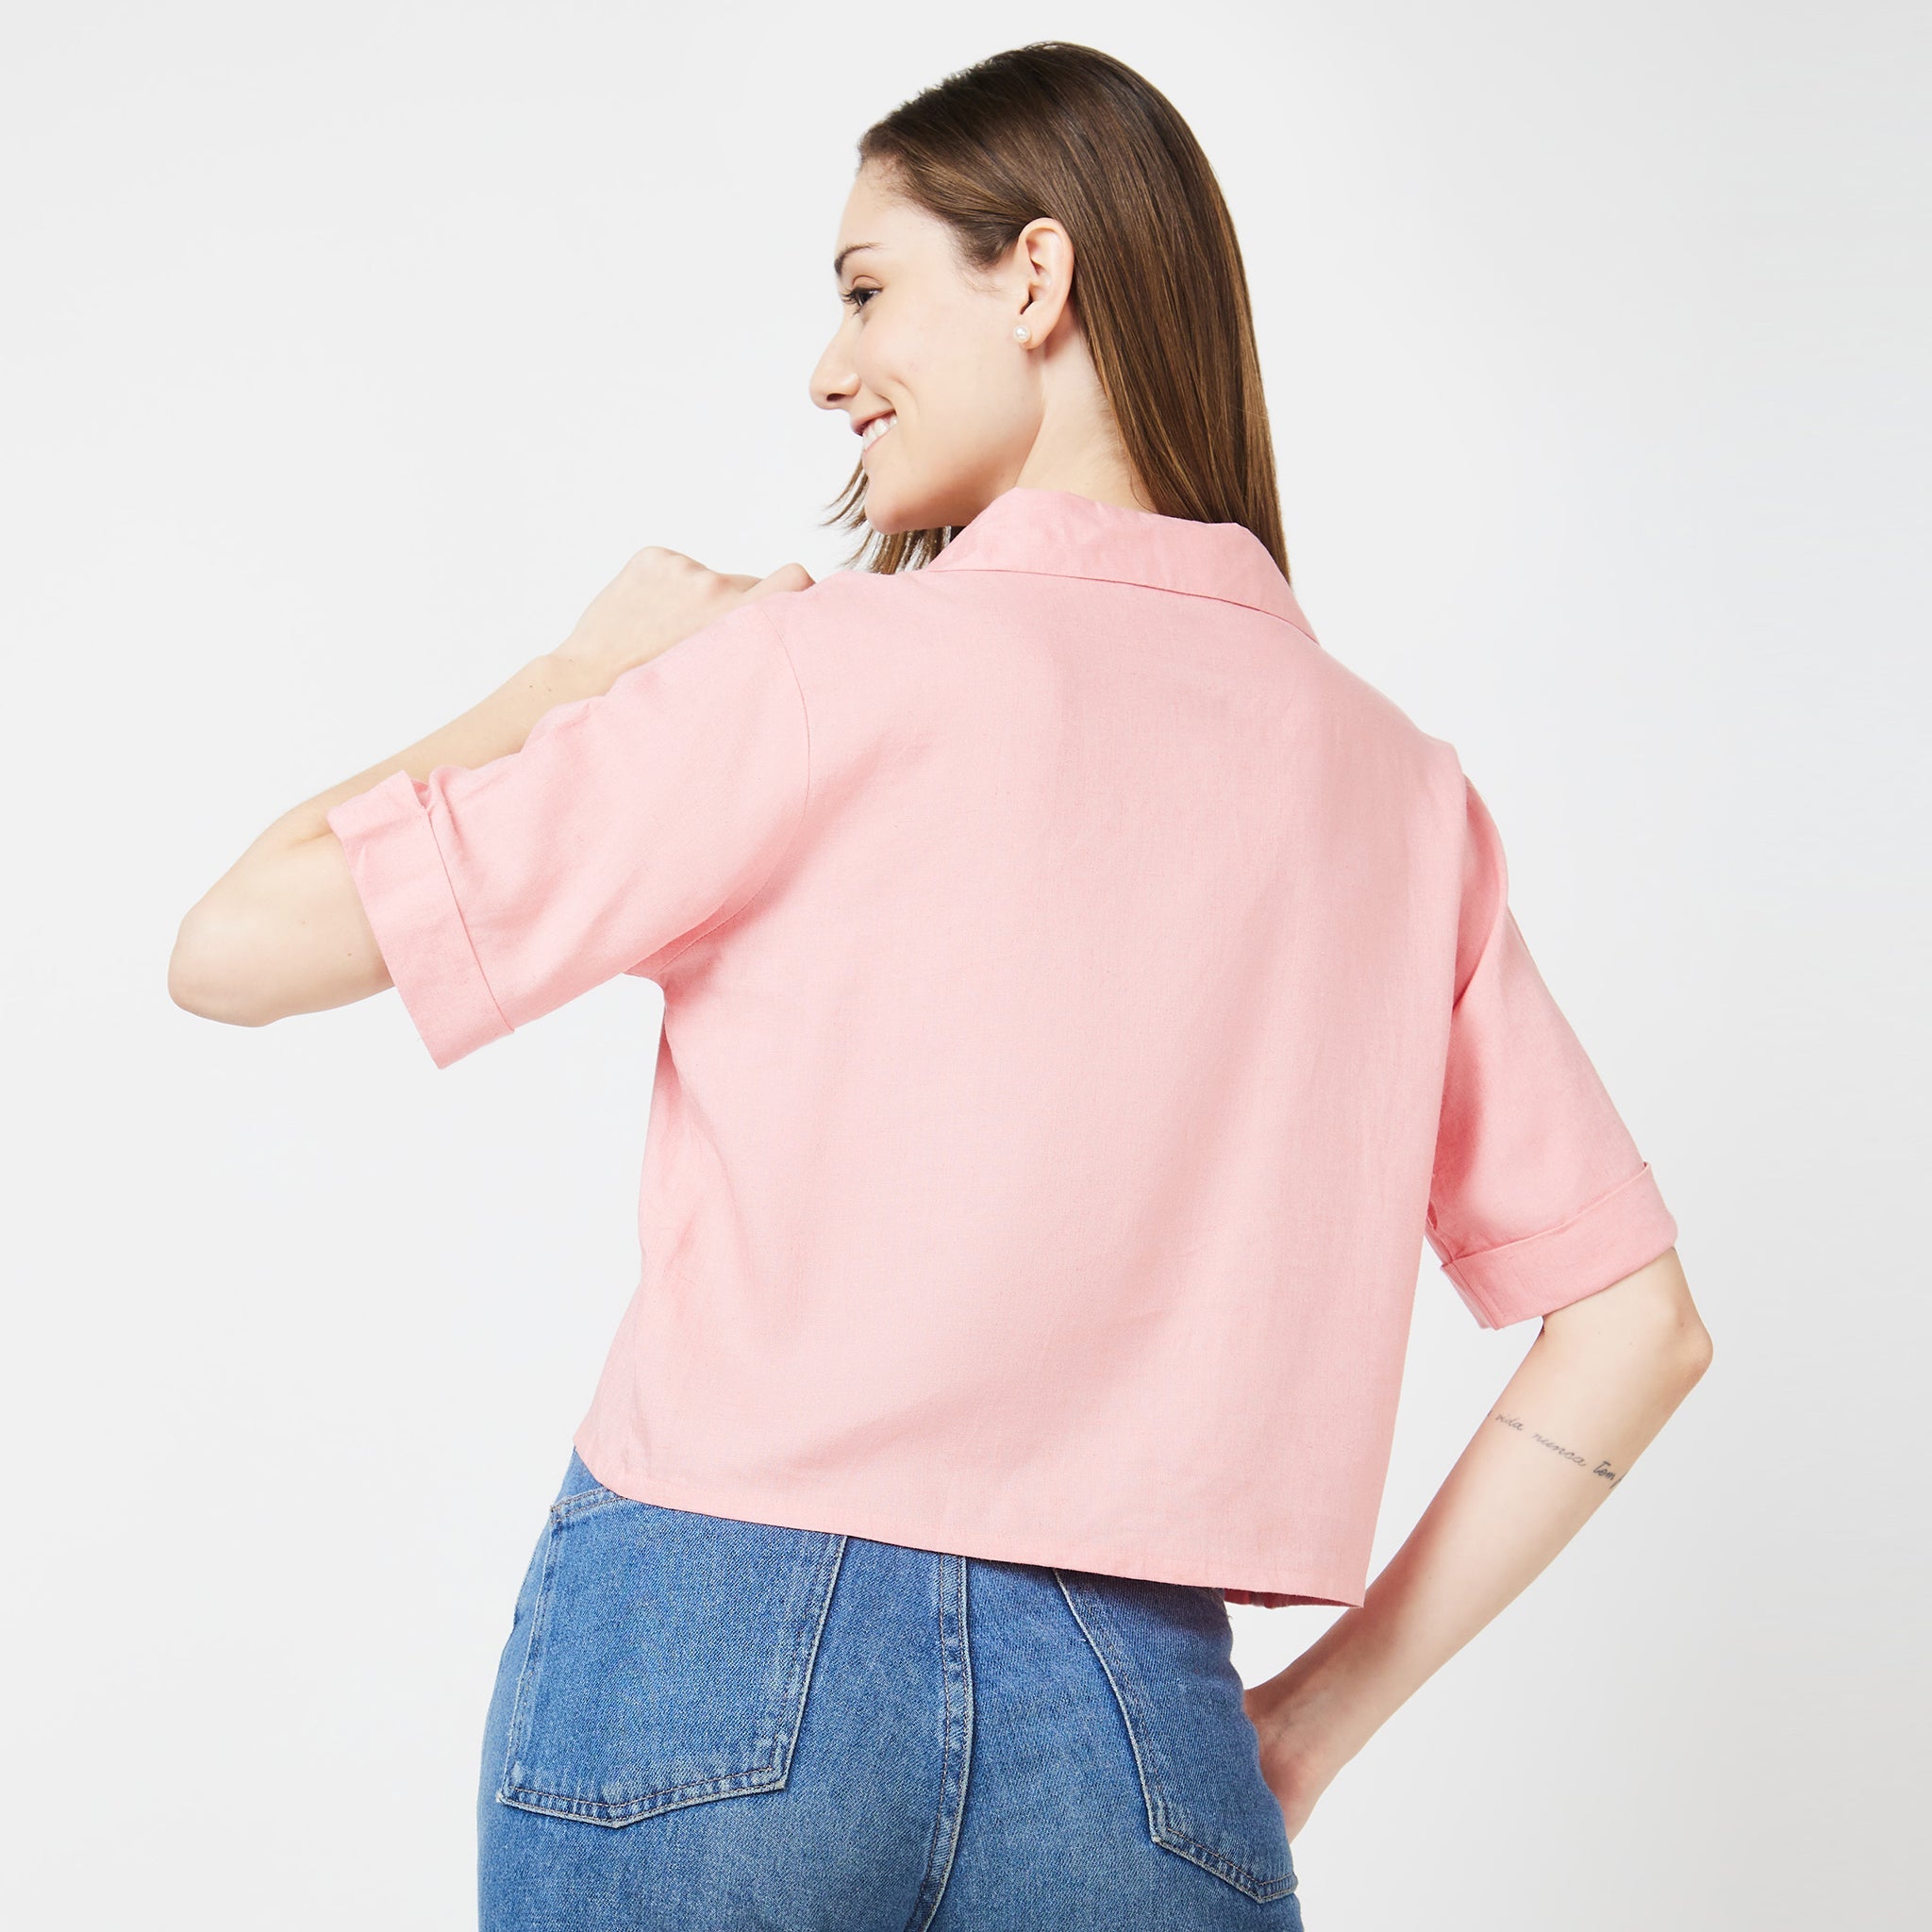 Women Wearing Boxy Fit Solid Shirt